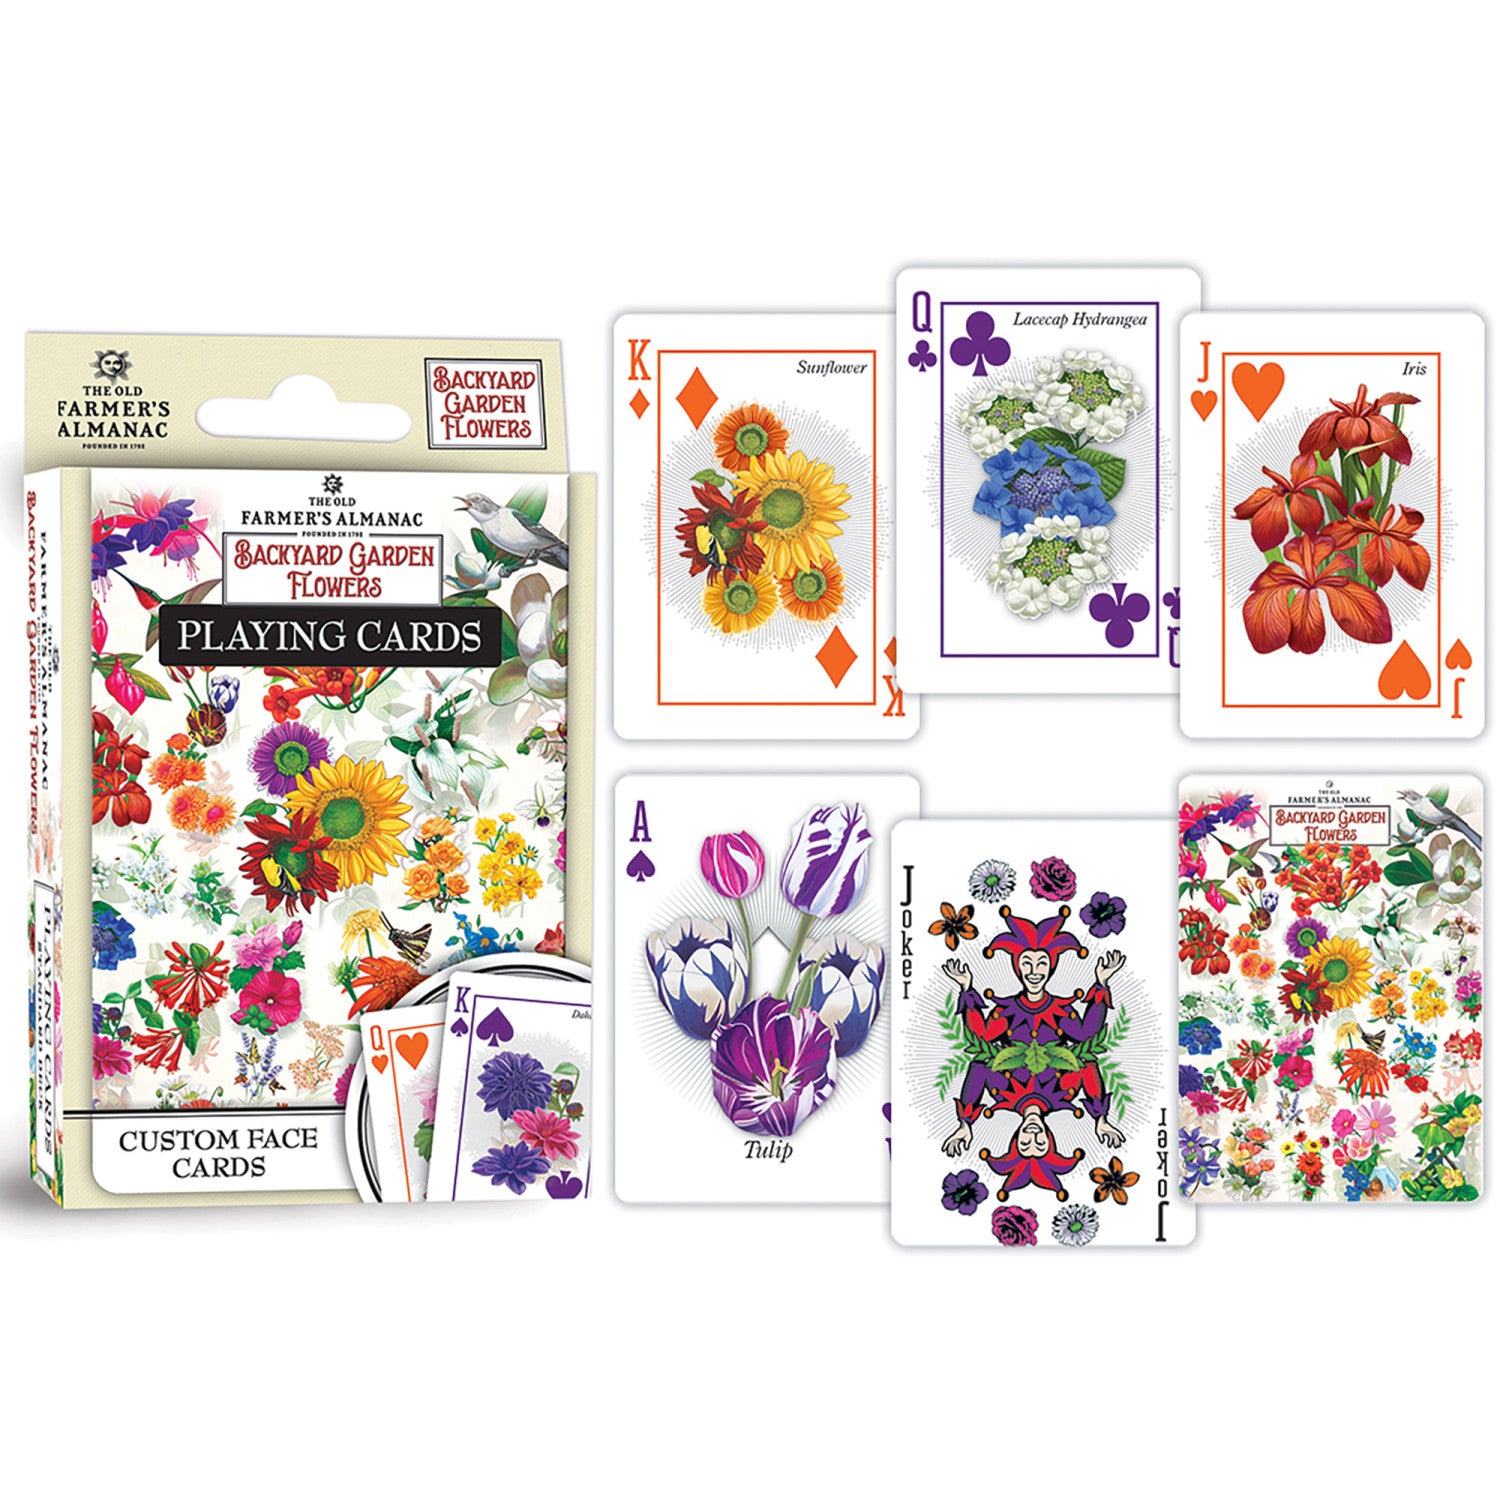 Farmer's Almanac - Backyard Garden Flowers Playing Cards - 54 Card Deck